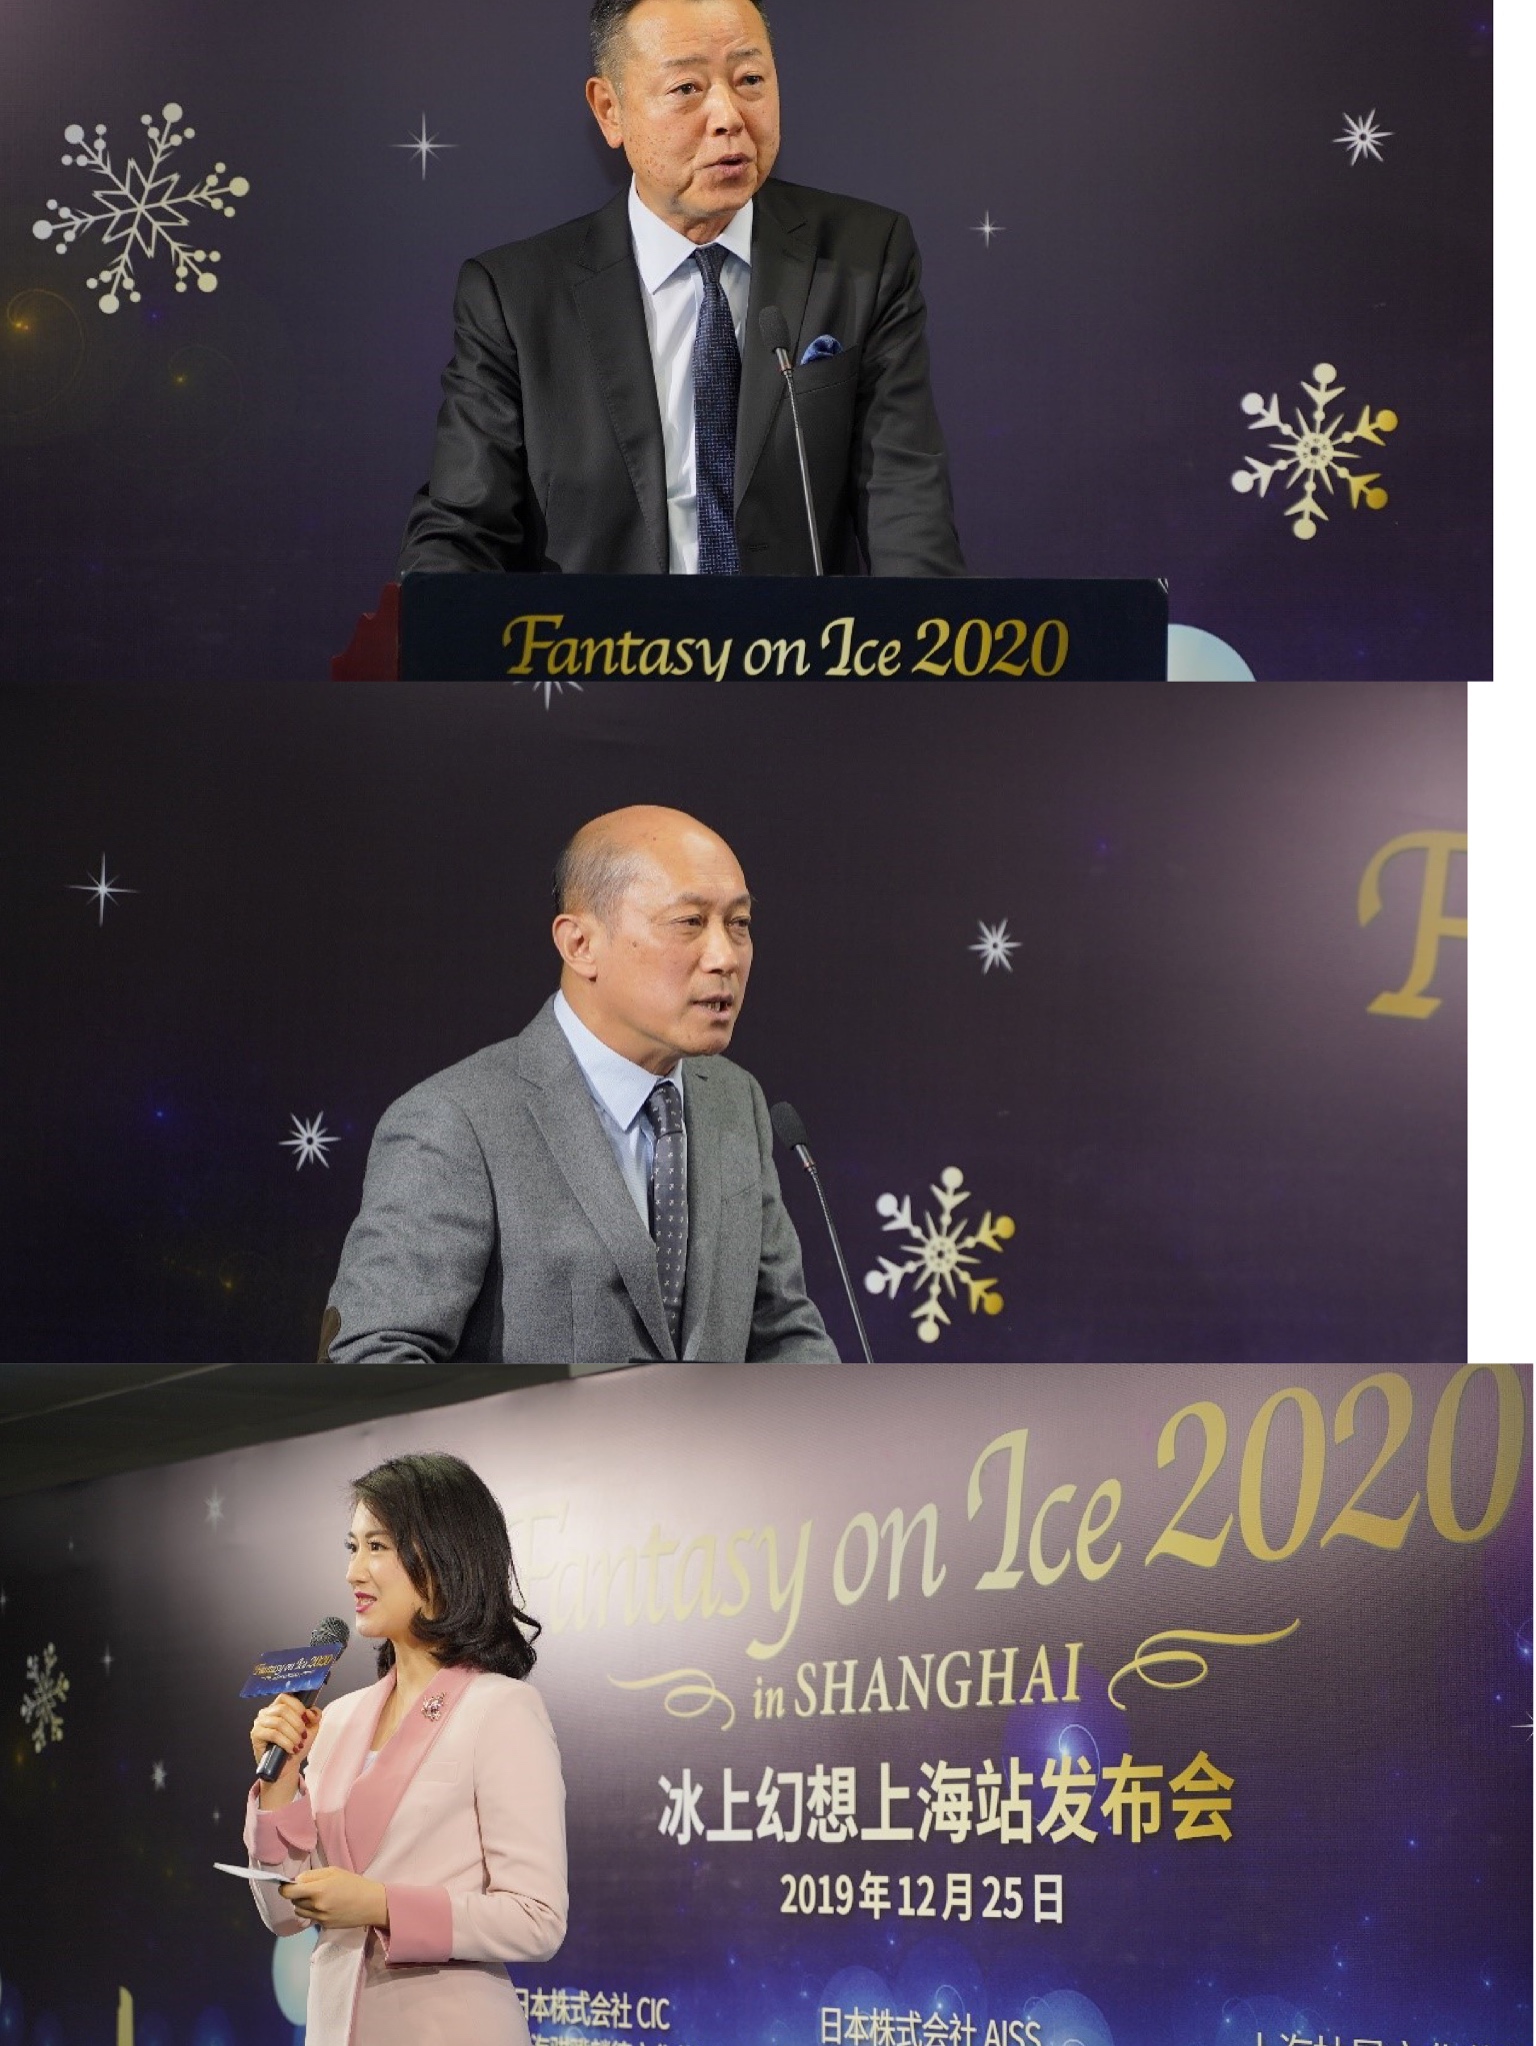 Fantasy on Ice2020冰上幻想即将开启 冰上舞台首次登陆中国